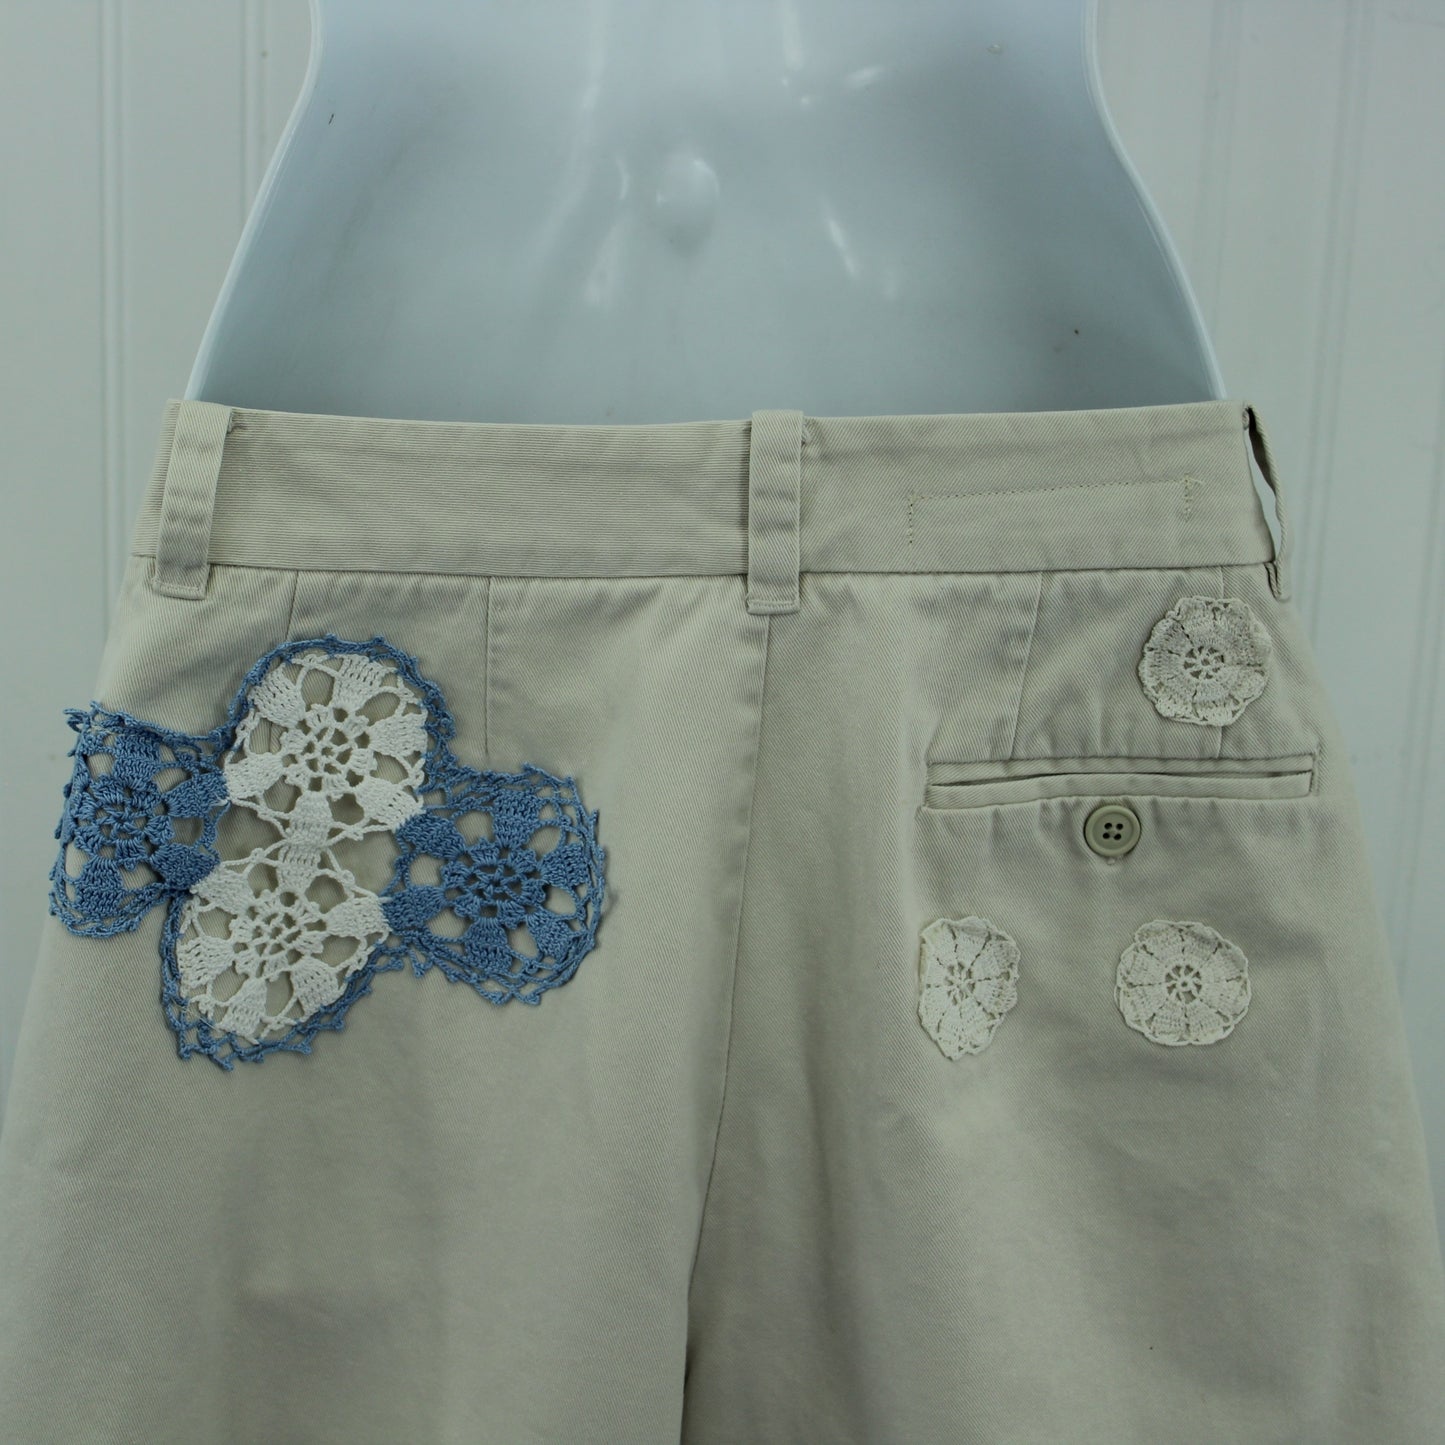 GAP Cotton Khaki Short Pants Patzi Design Enhanced Embroidery Crochet closeup view of back pants